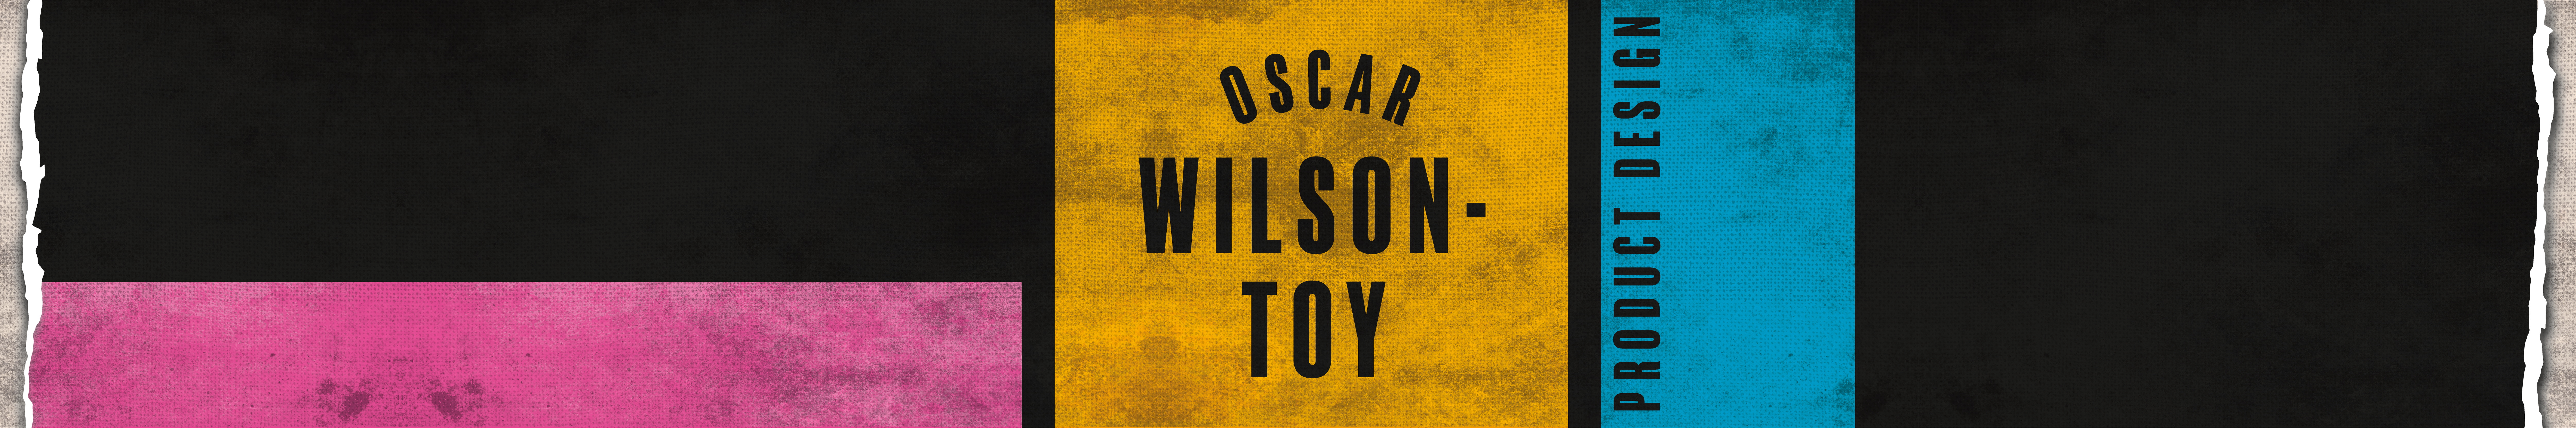 Oscar Wilson-Toy's profile banner